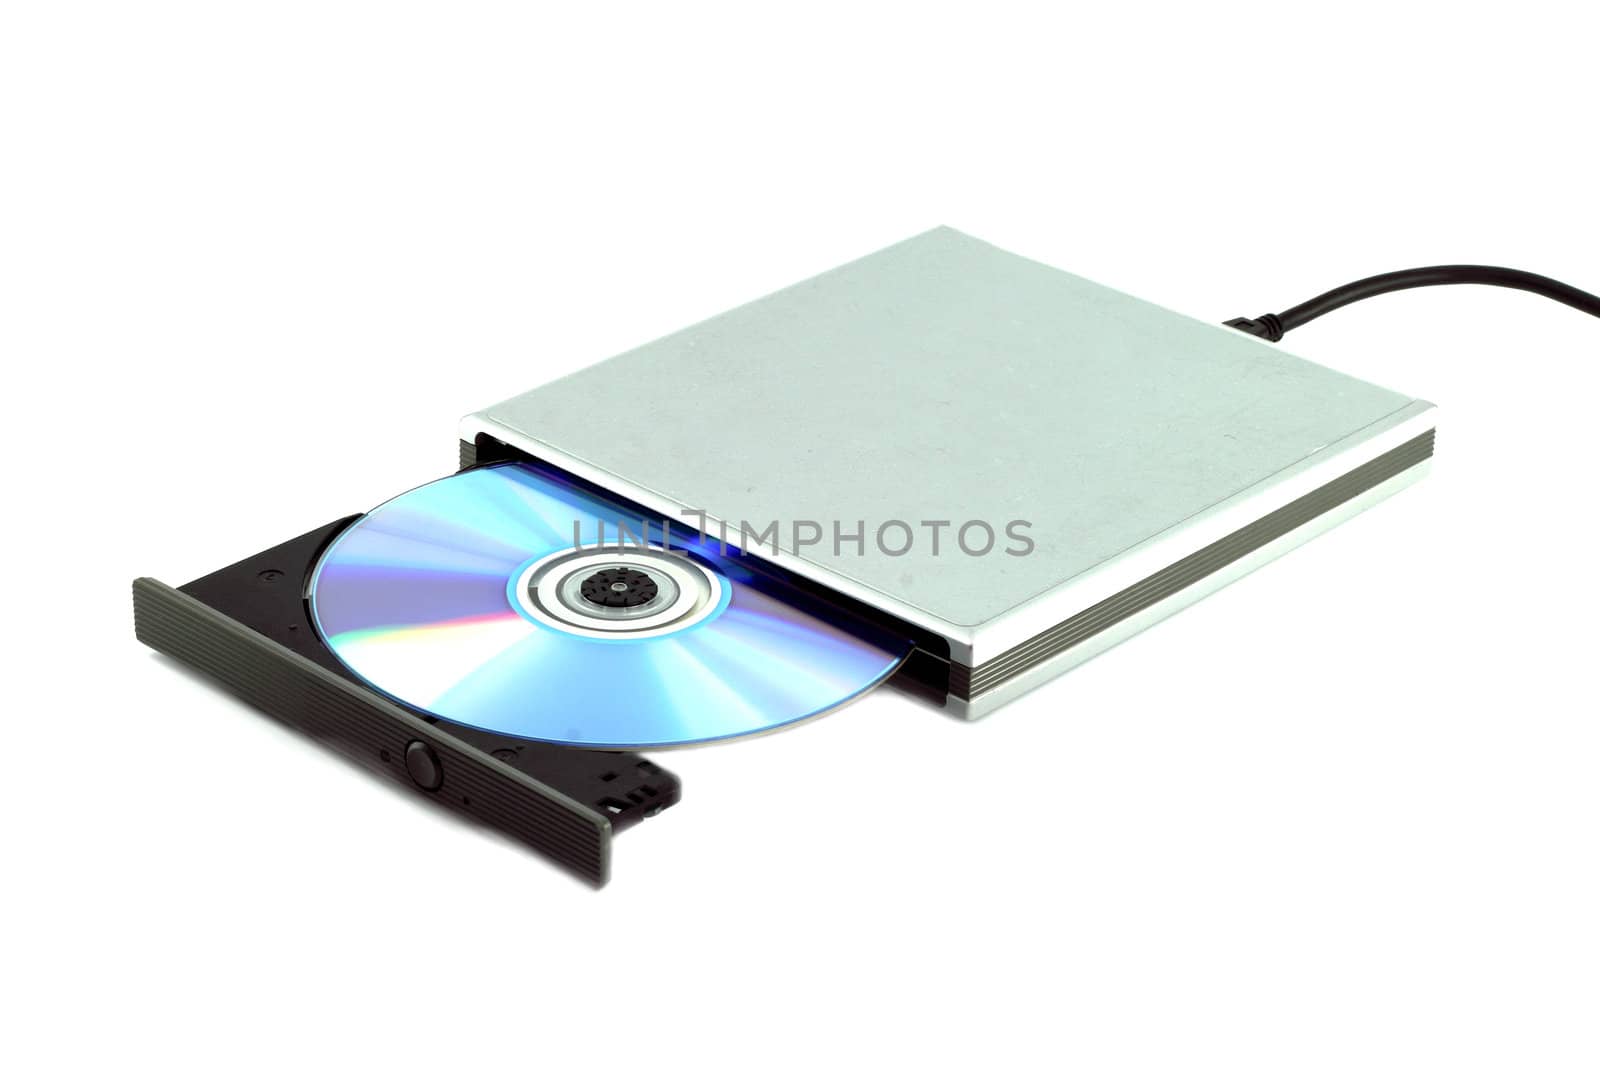 CD & DVD External Portable on white background